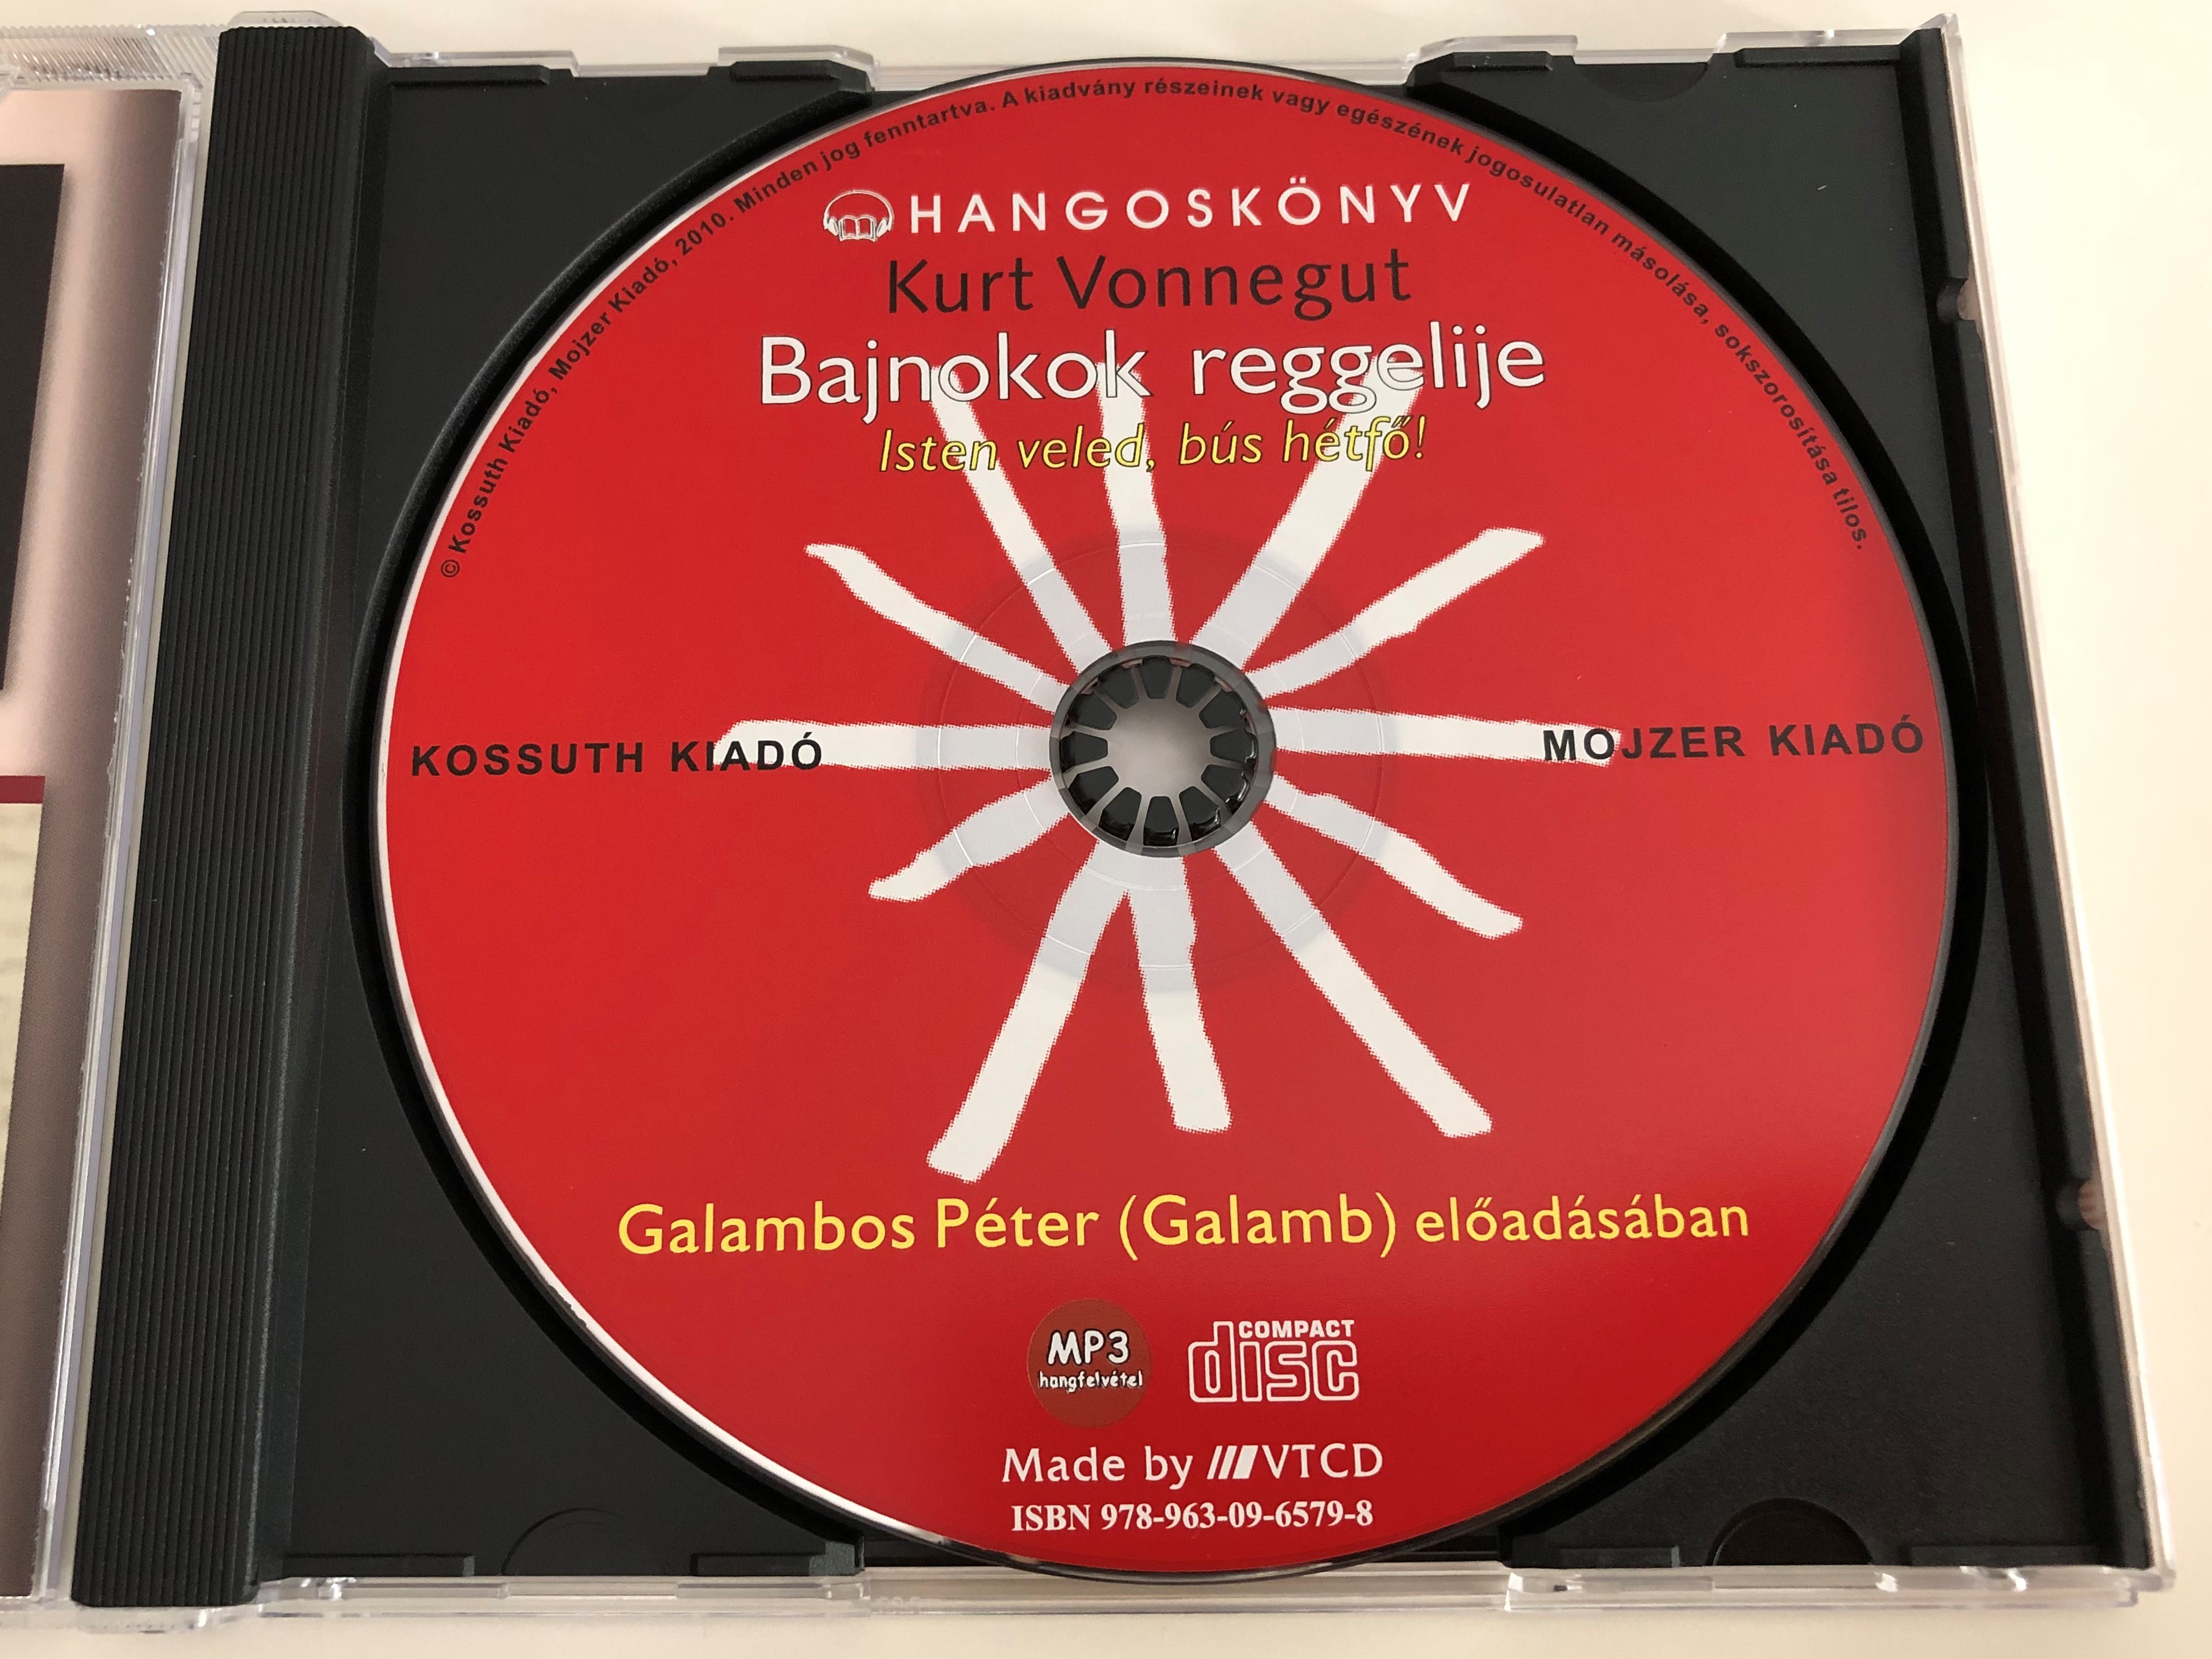 bajnokok-reggelije-by-kurt-vonnegut-hungarian-audio-book-of-breakfast-of-champion-translated-by-b-k-s-andr-s-read-by-galambos-p-ter-galamb-kossuth-mojzer-audio-cd-2010-2-.jpg